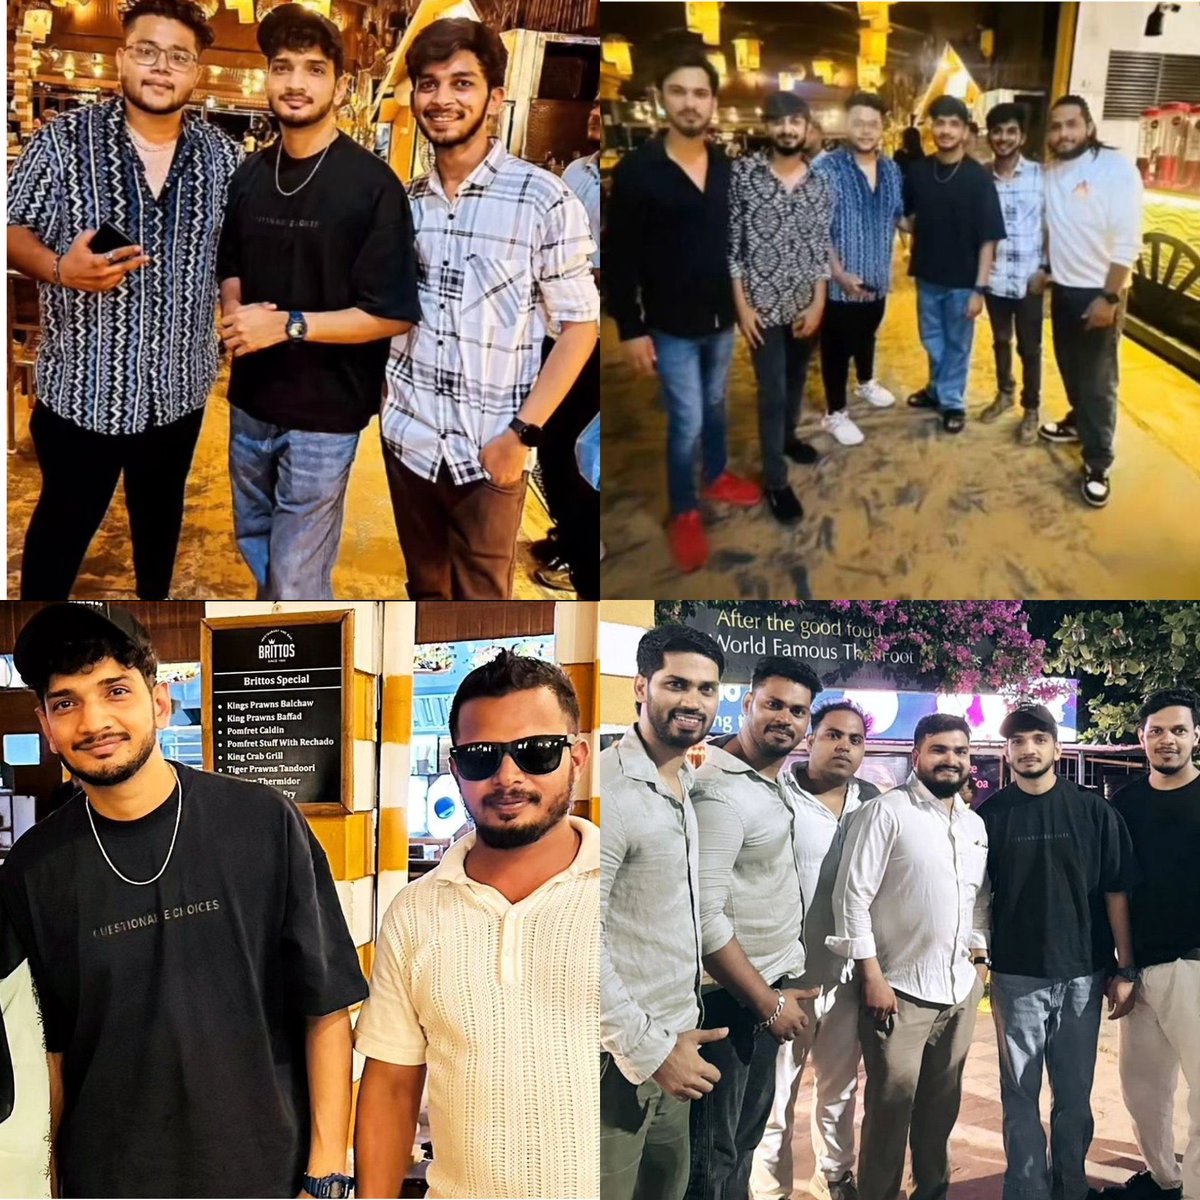 Our King @munawar0018 was seen mingling with fans in Goa India showing his friendly nature.

#MunawarFaruqui || #MKJW || #MKJW𓃵
#MunawarKiJanta || #MunawarWarriors